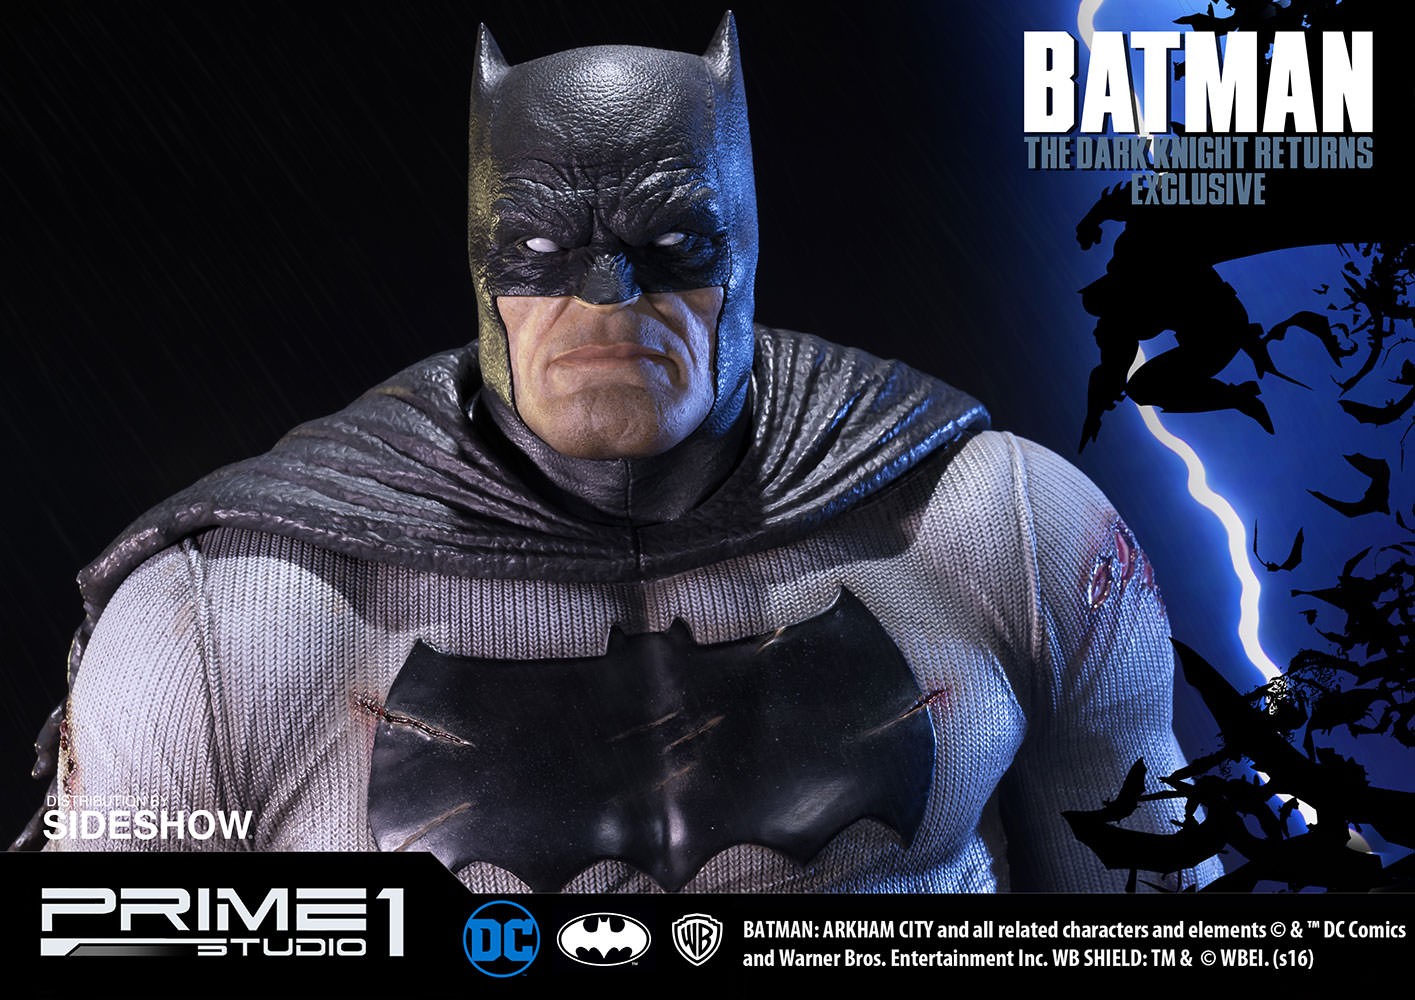 The Dark Knight Returns Batman Exclusive Edition (Prototype Shown) View 1